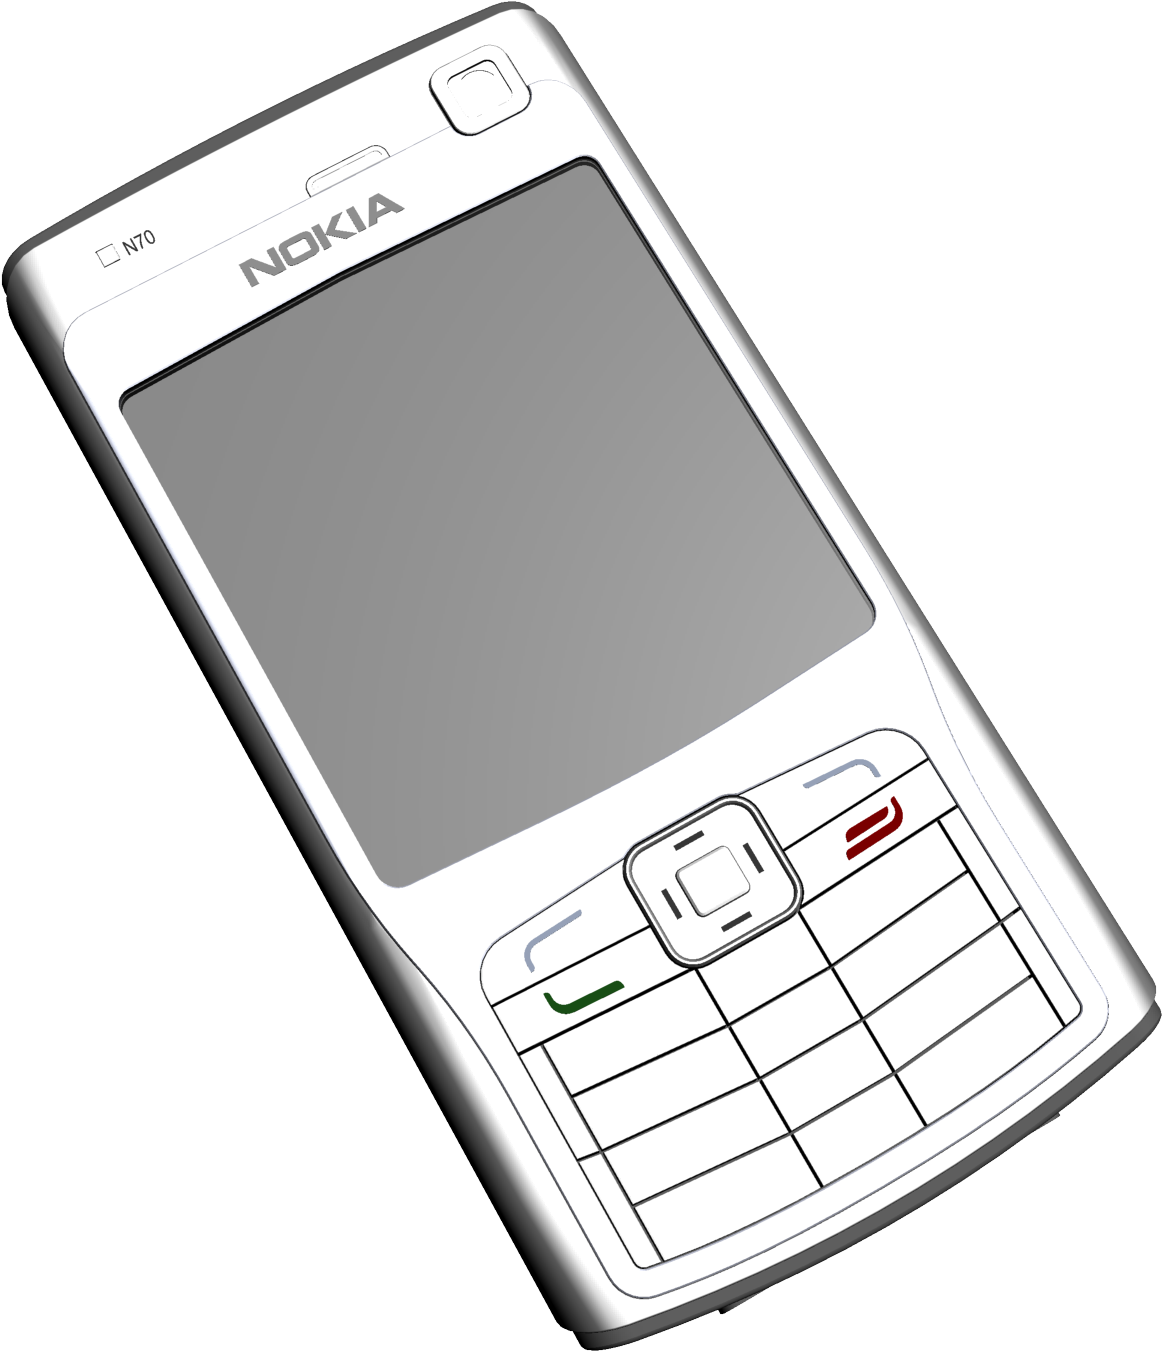 Nokia N70 Classic Phone Clipart